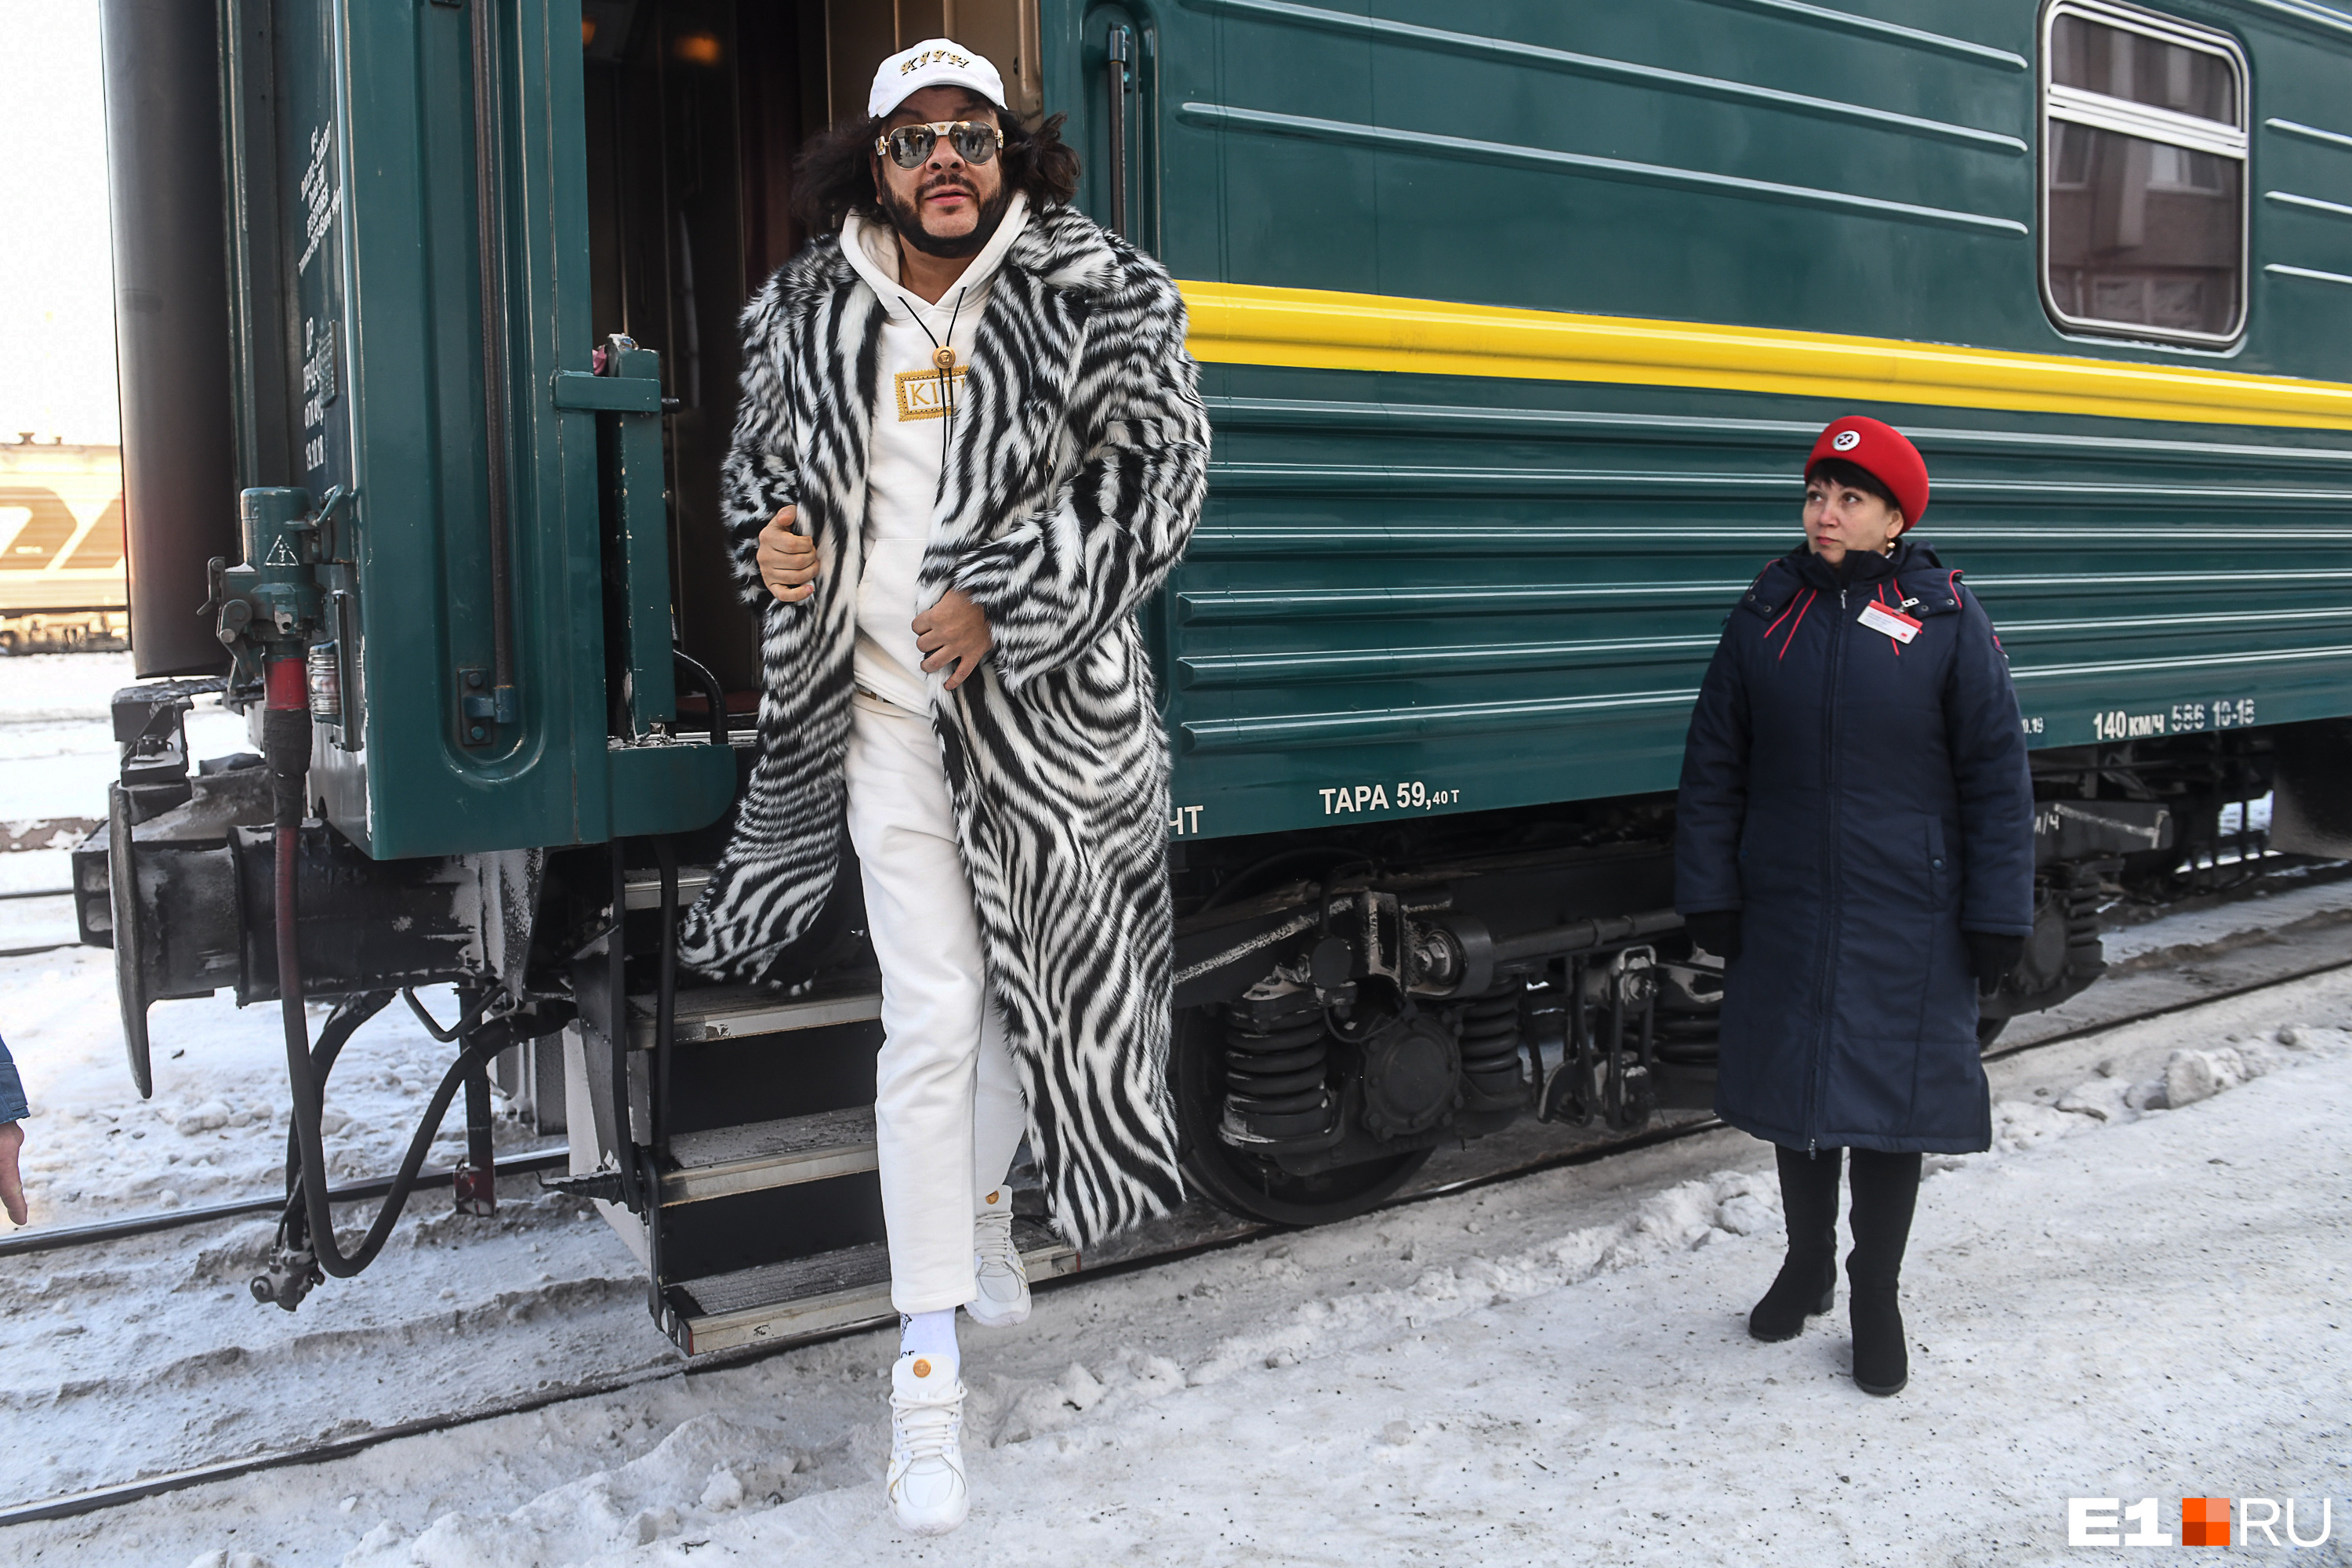 В феврале в Екатеринбург на поезде <a href="https://www.e1.ru/news/spool/news_id-66497428.html" target="_blank" class="_">приехал Филипп Киркоров</a>